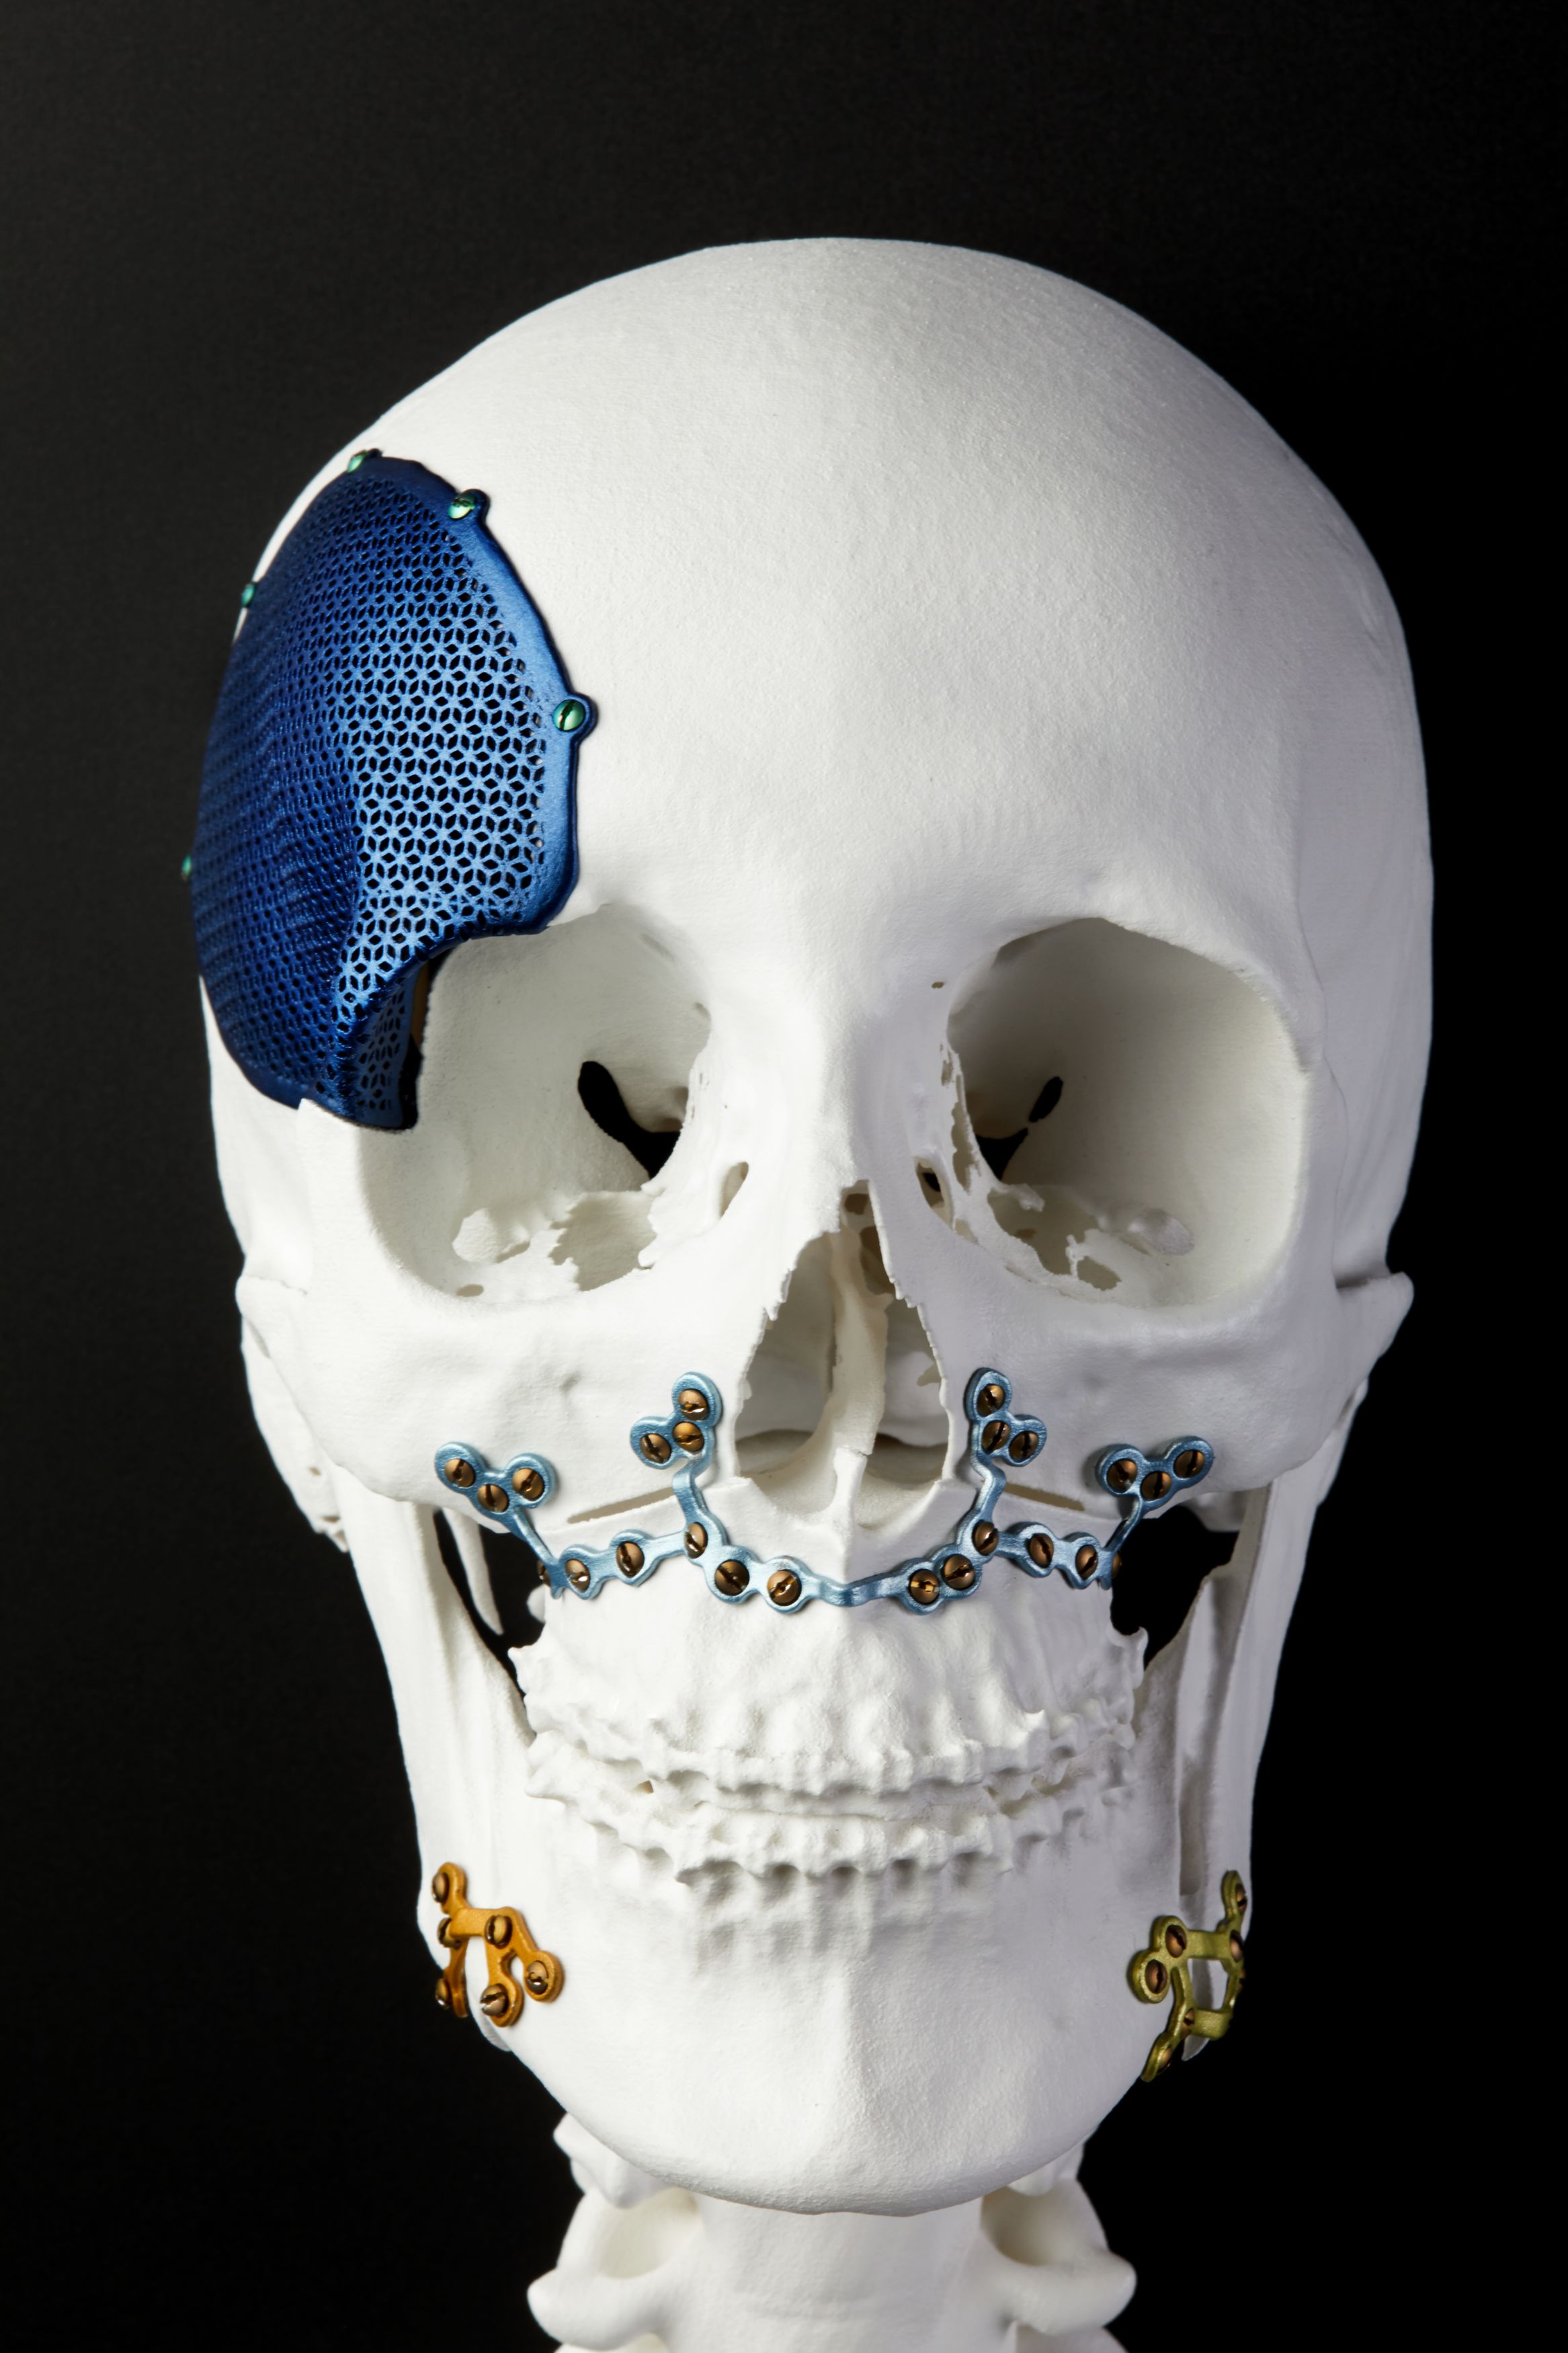 3D Printed Bone Replicas Aid In Plastic Surgery - GE